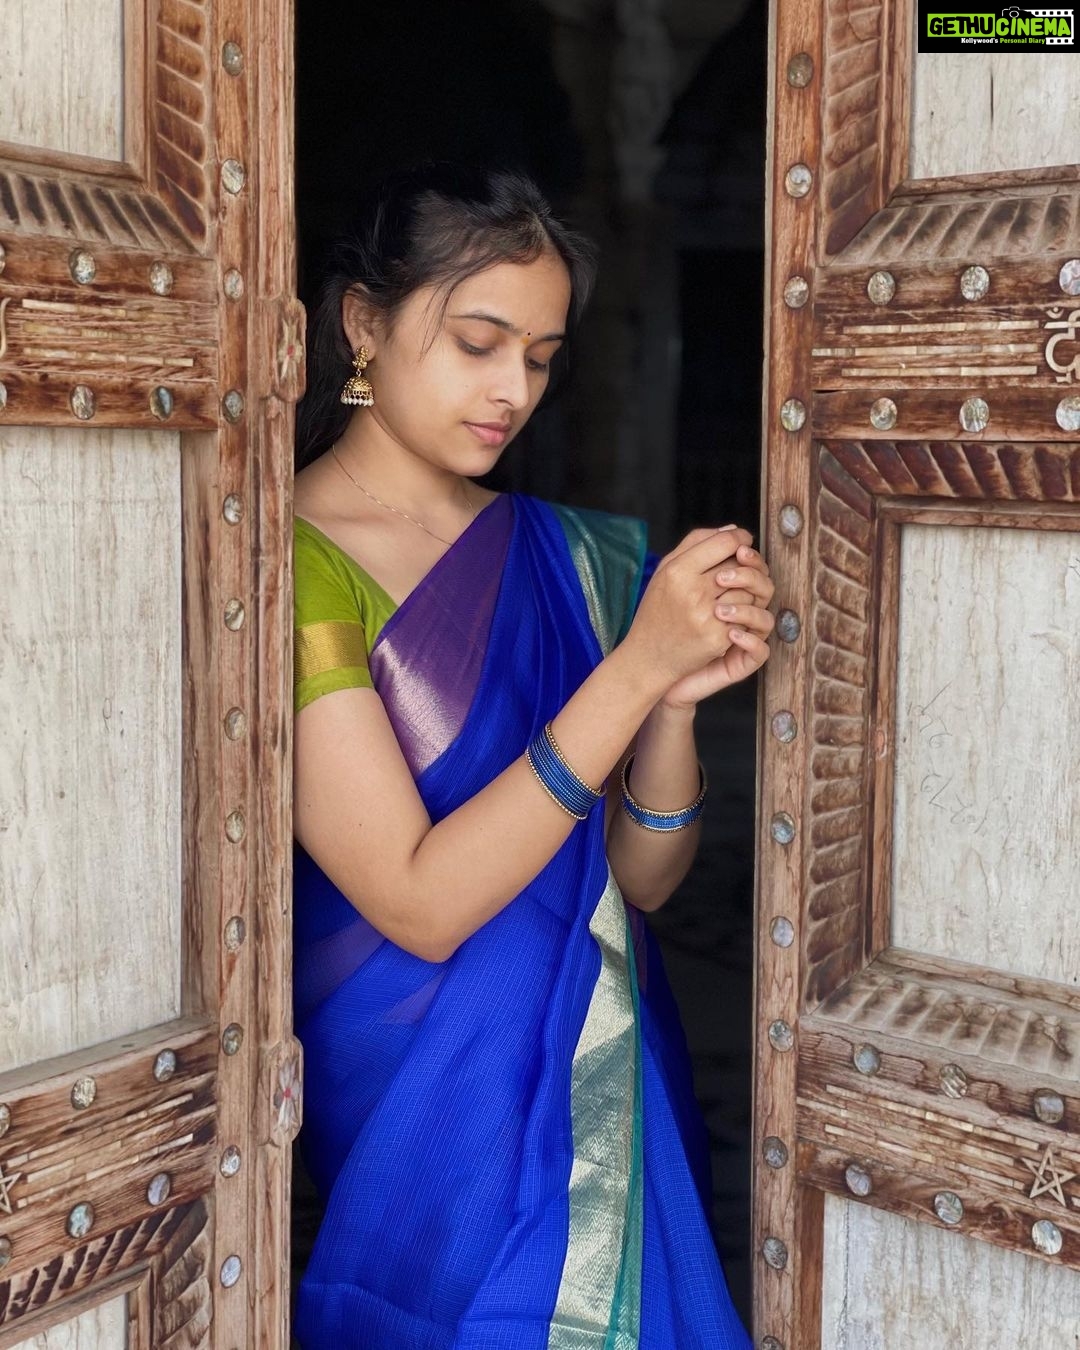 Sri Divya - 301K Likes - Most Liked Instagram Photos